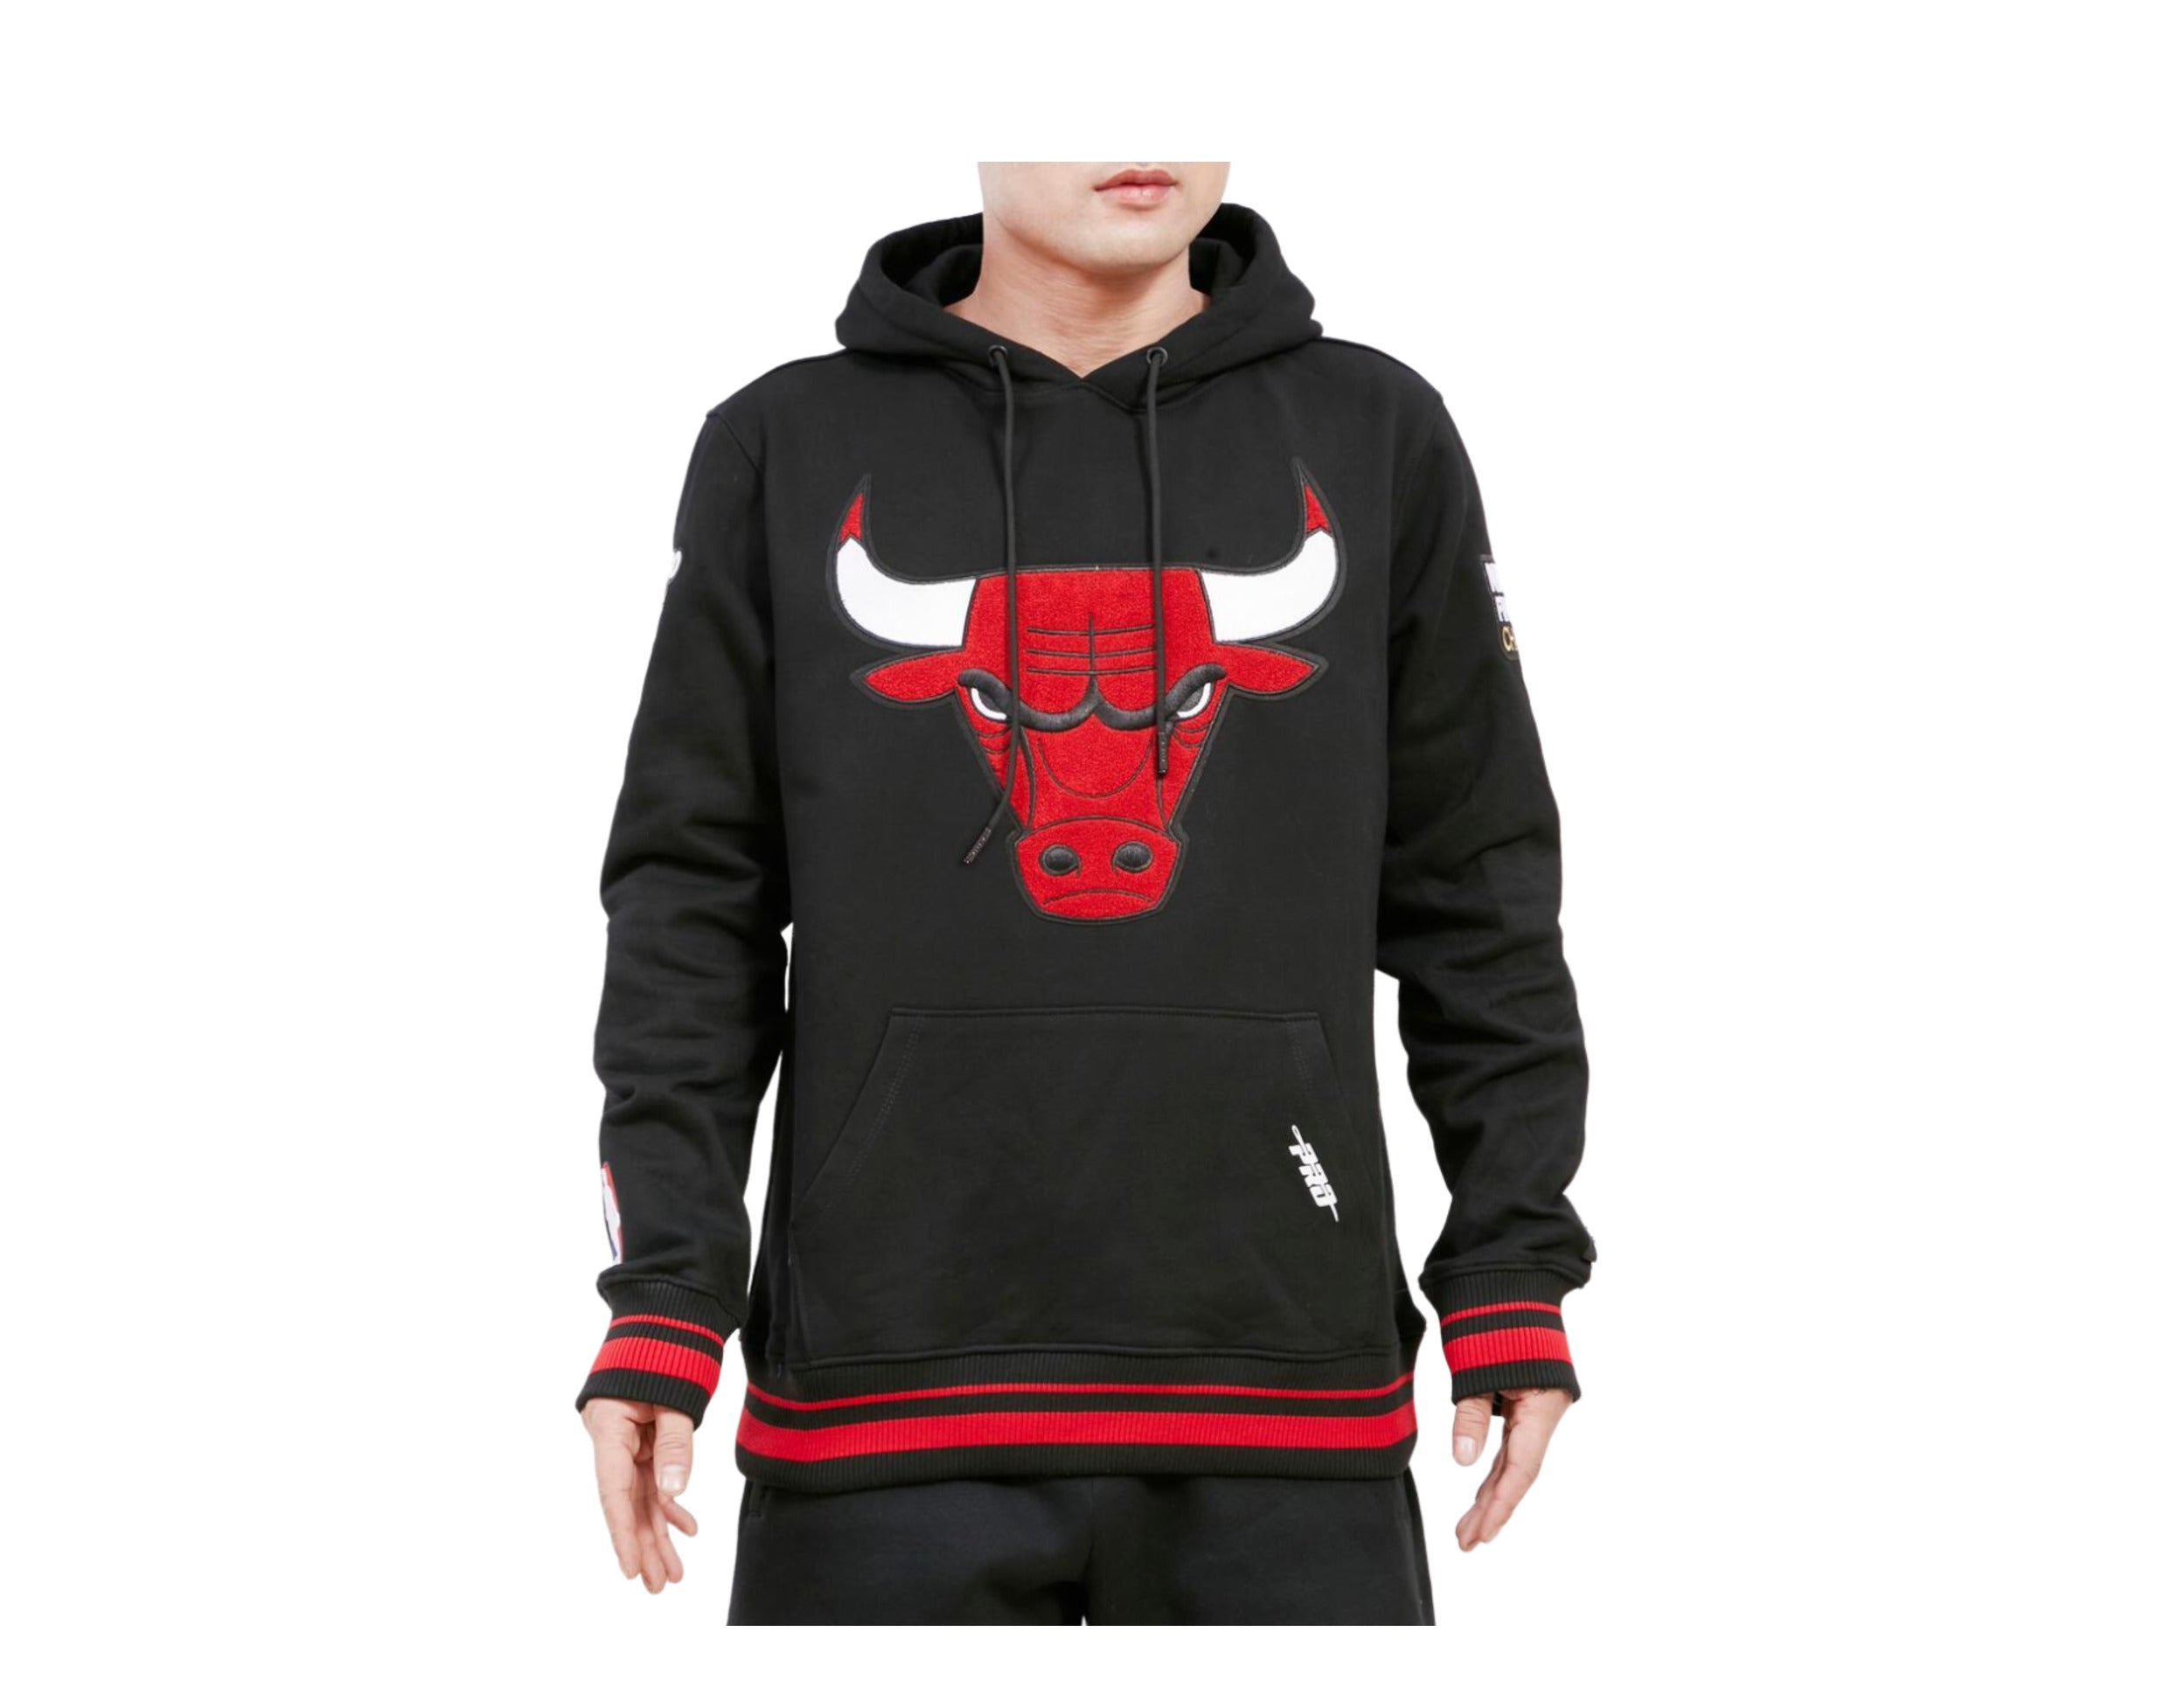 chicago bulls pro standard hoodie